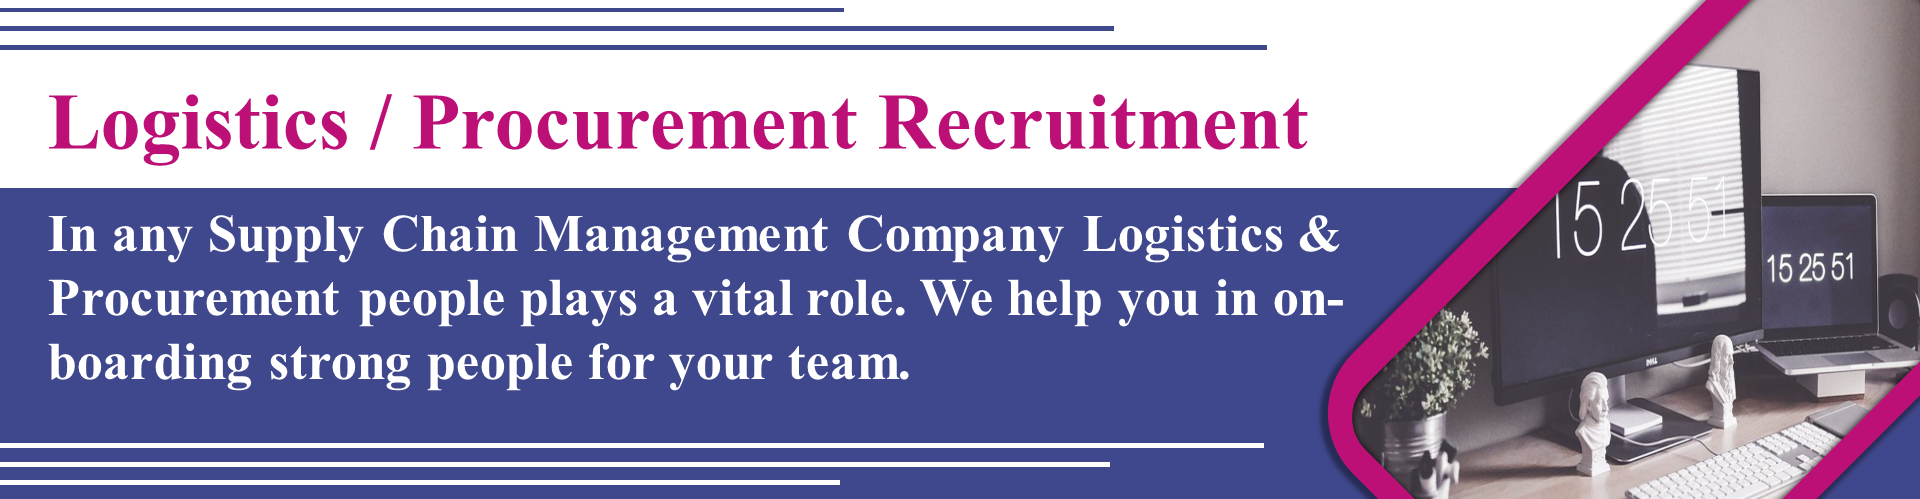 Logistics / Procurement Recruitment